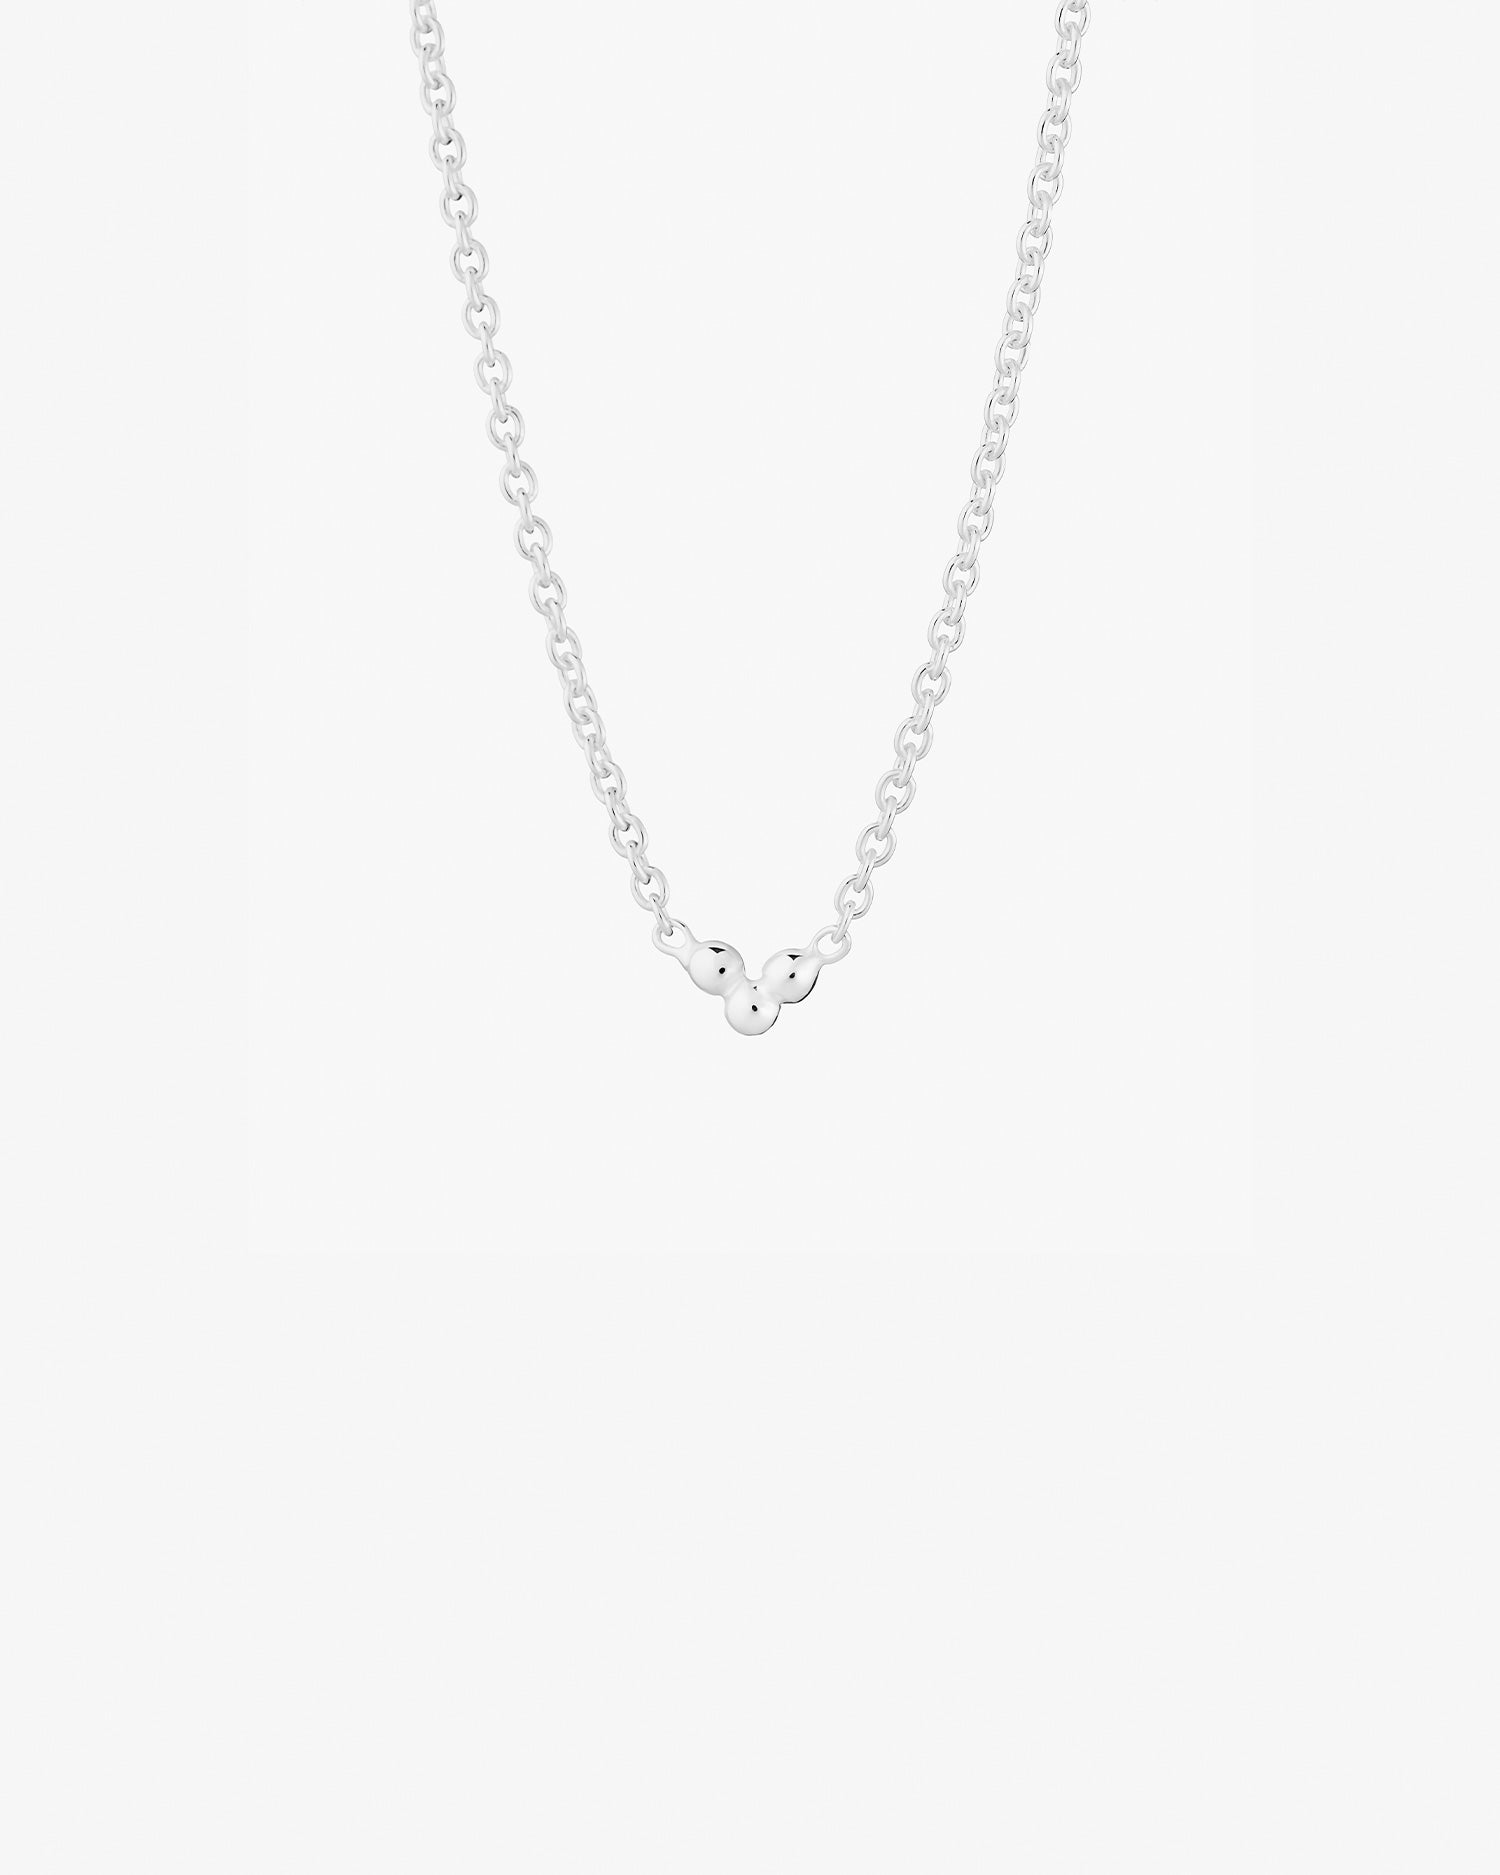 Drops-necklace-04